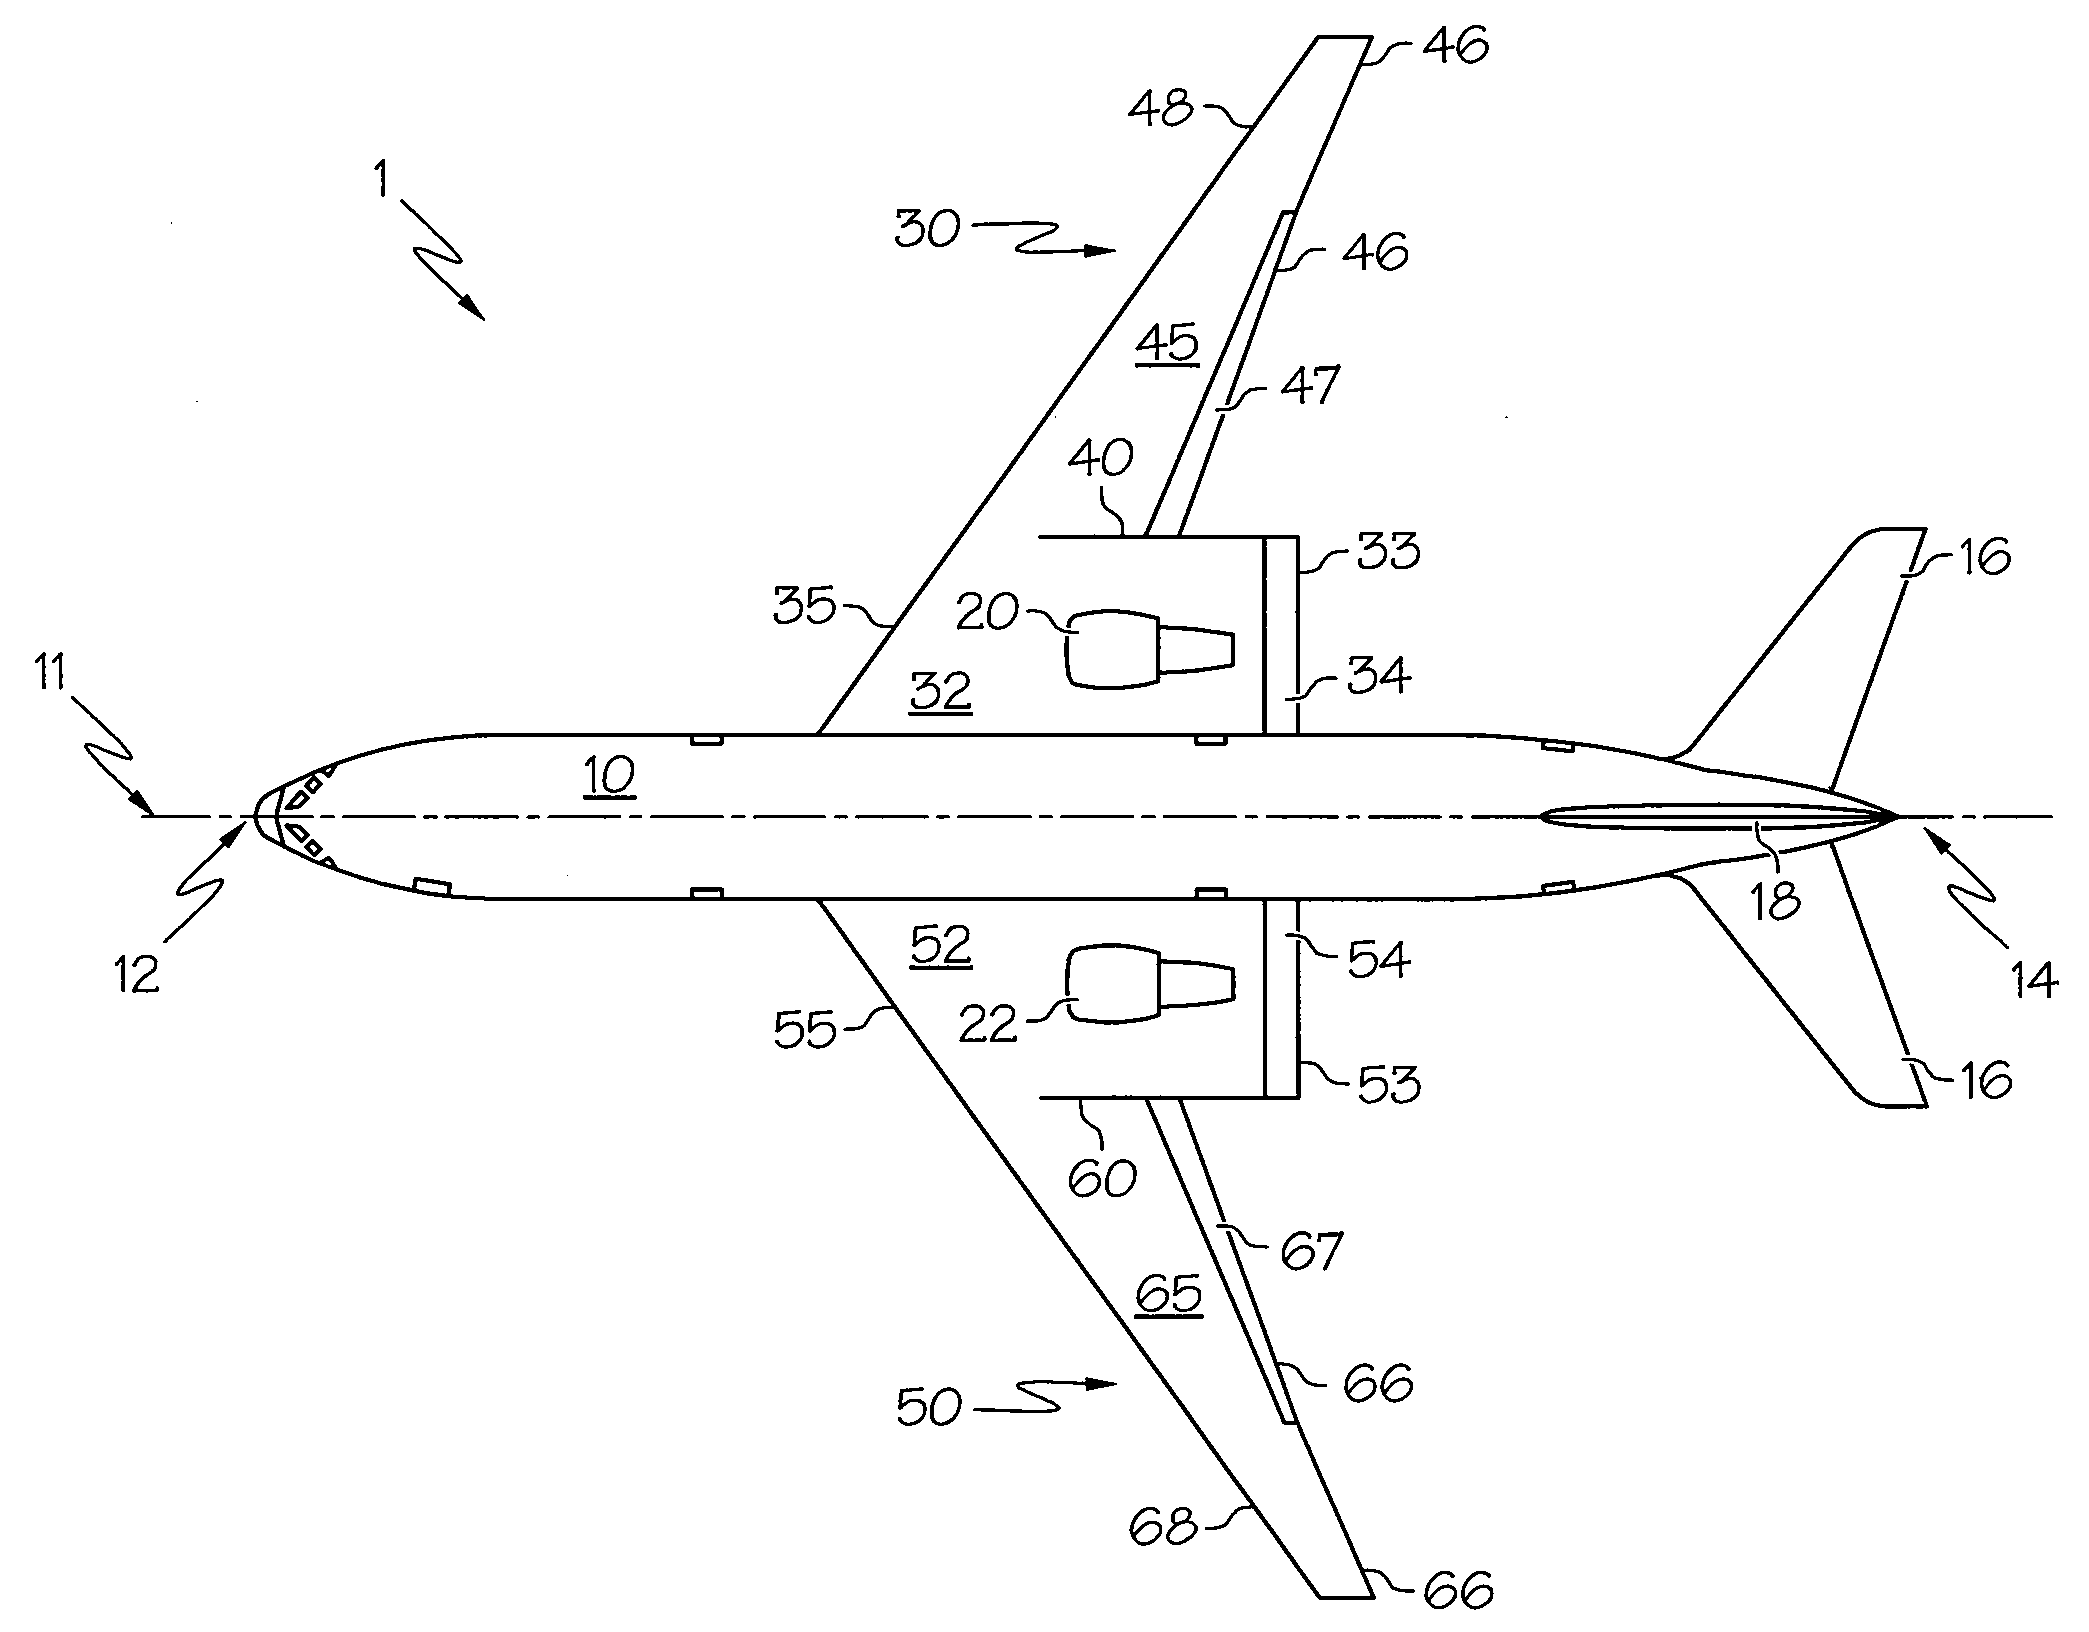 Noise-shielding wing configuration